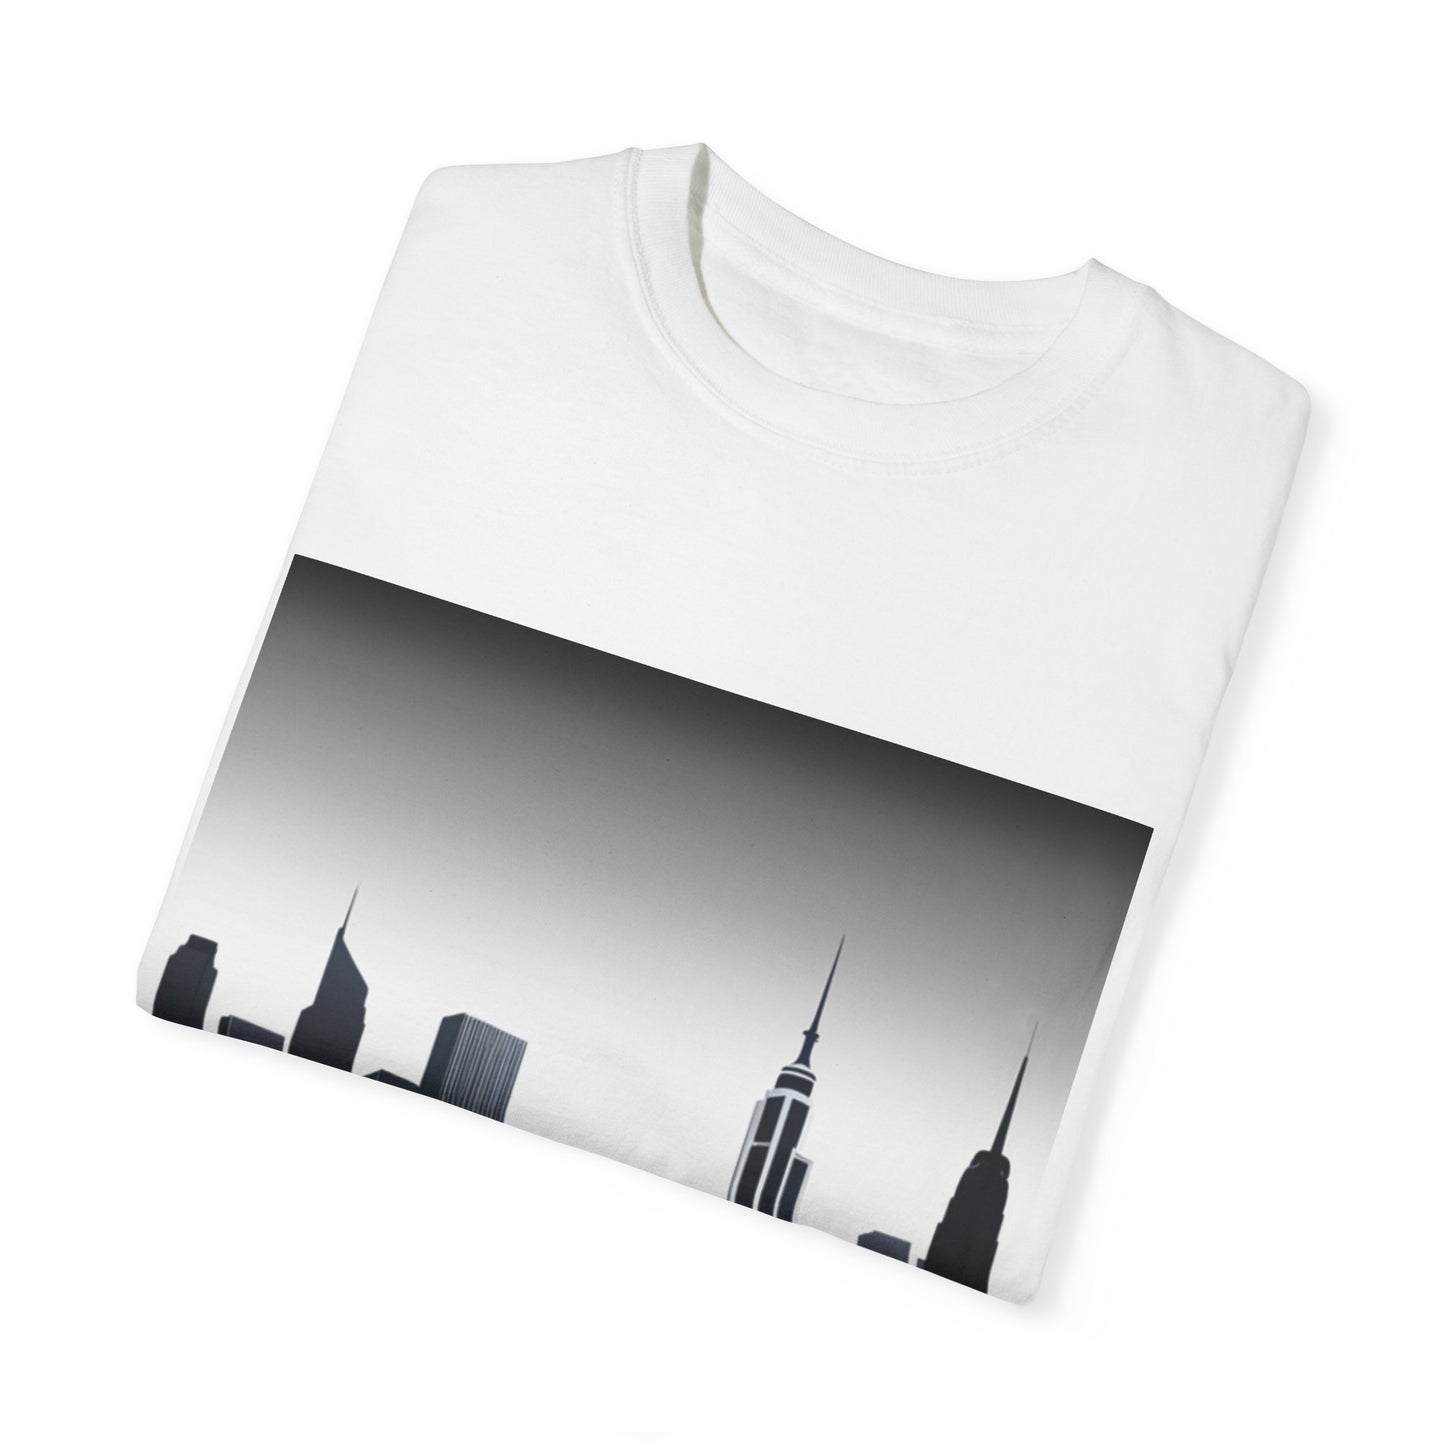 City Skylione Unisex Garment-Dyed T-shirt